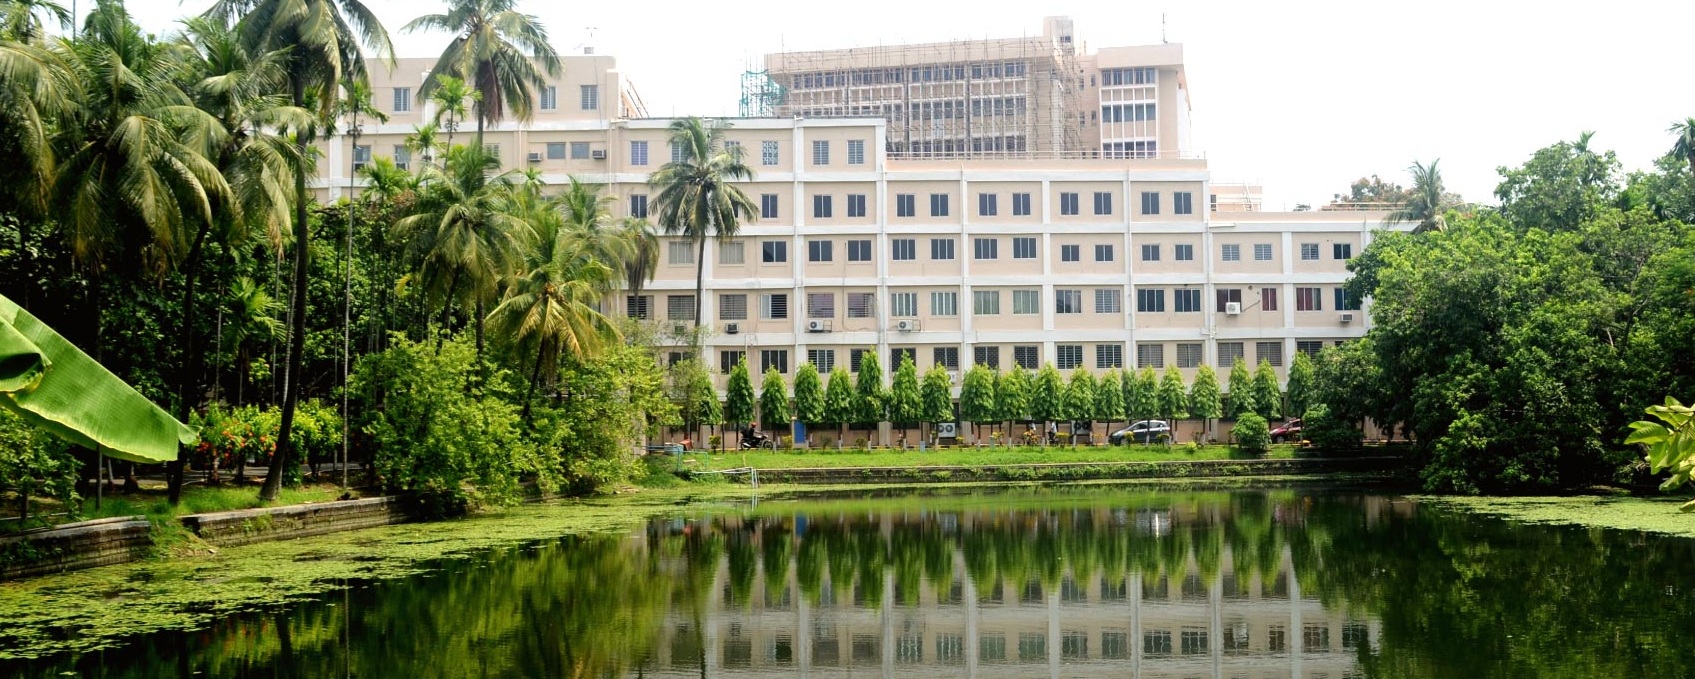 Indian Statistical Institute, Giridih Image